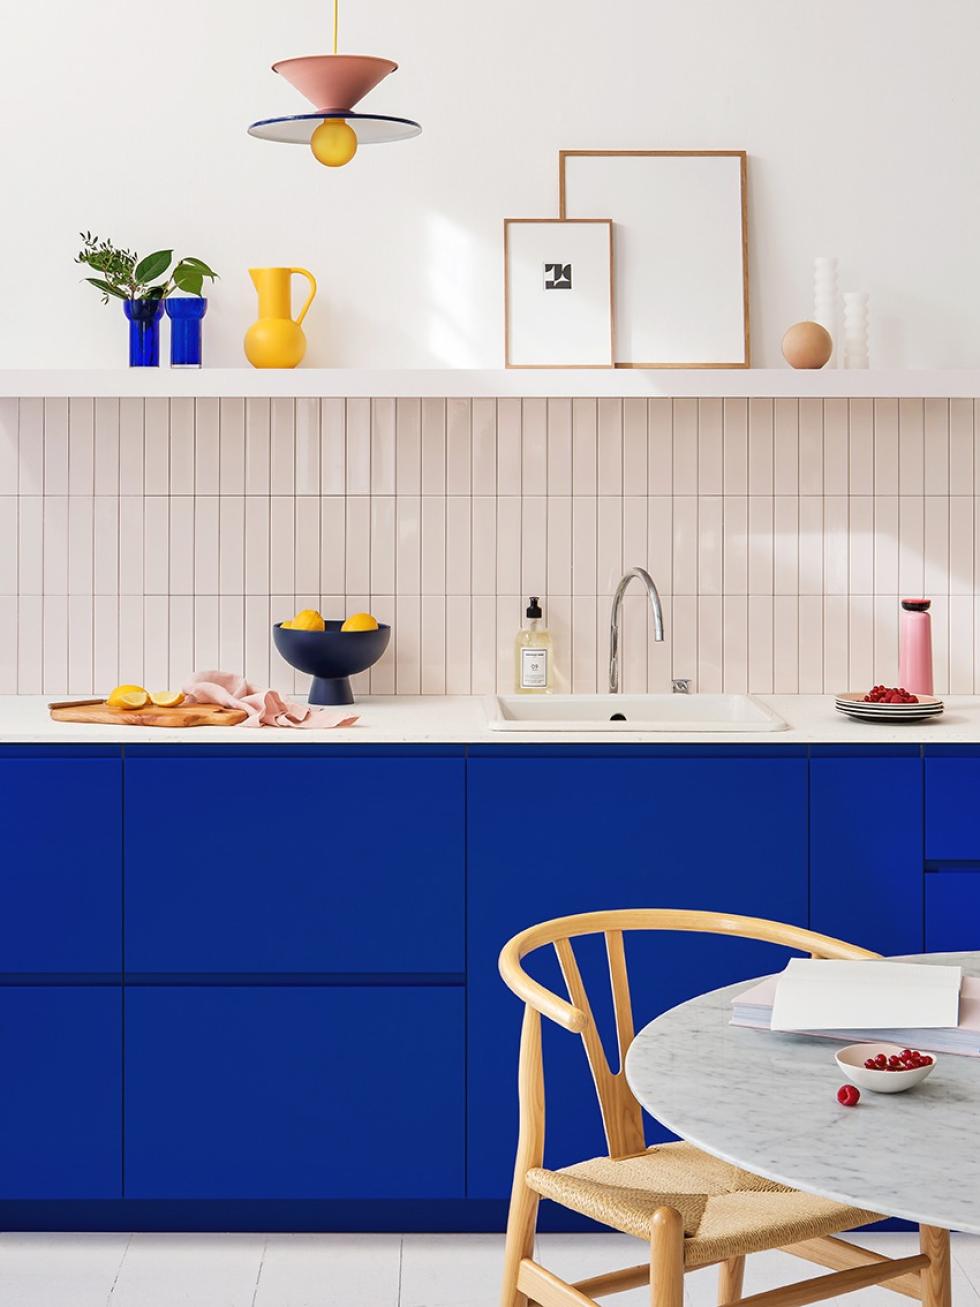 Electric kitchen designed by Plum Living studio - ⓒ Hervé Goluza for Plum Living